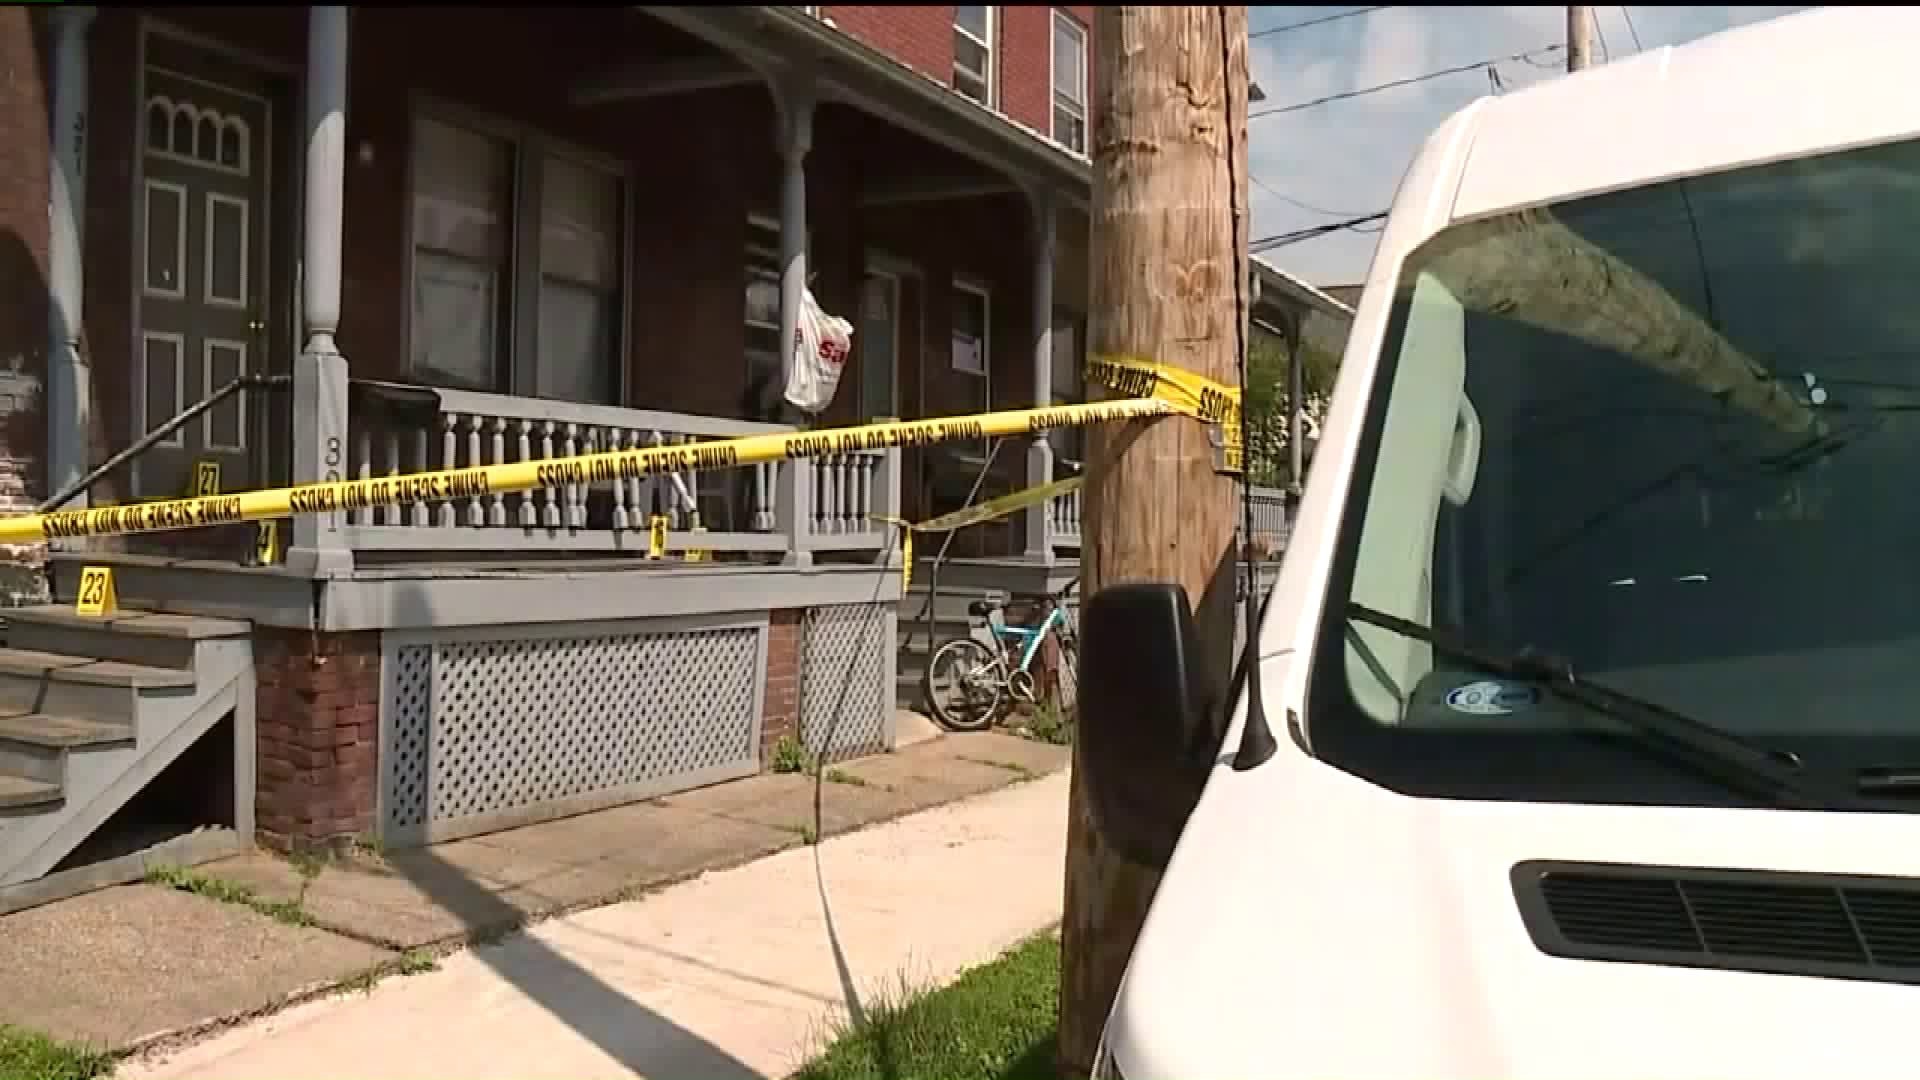 Police Investigating Stabbing Death in Williamsport